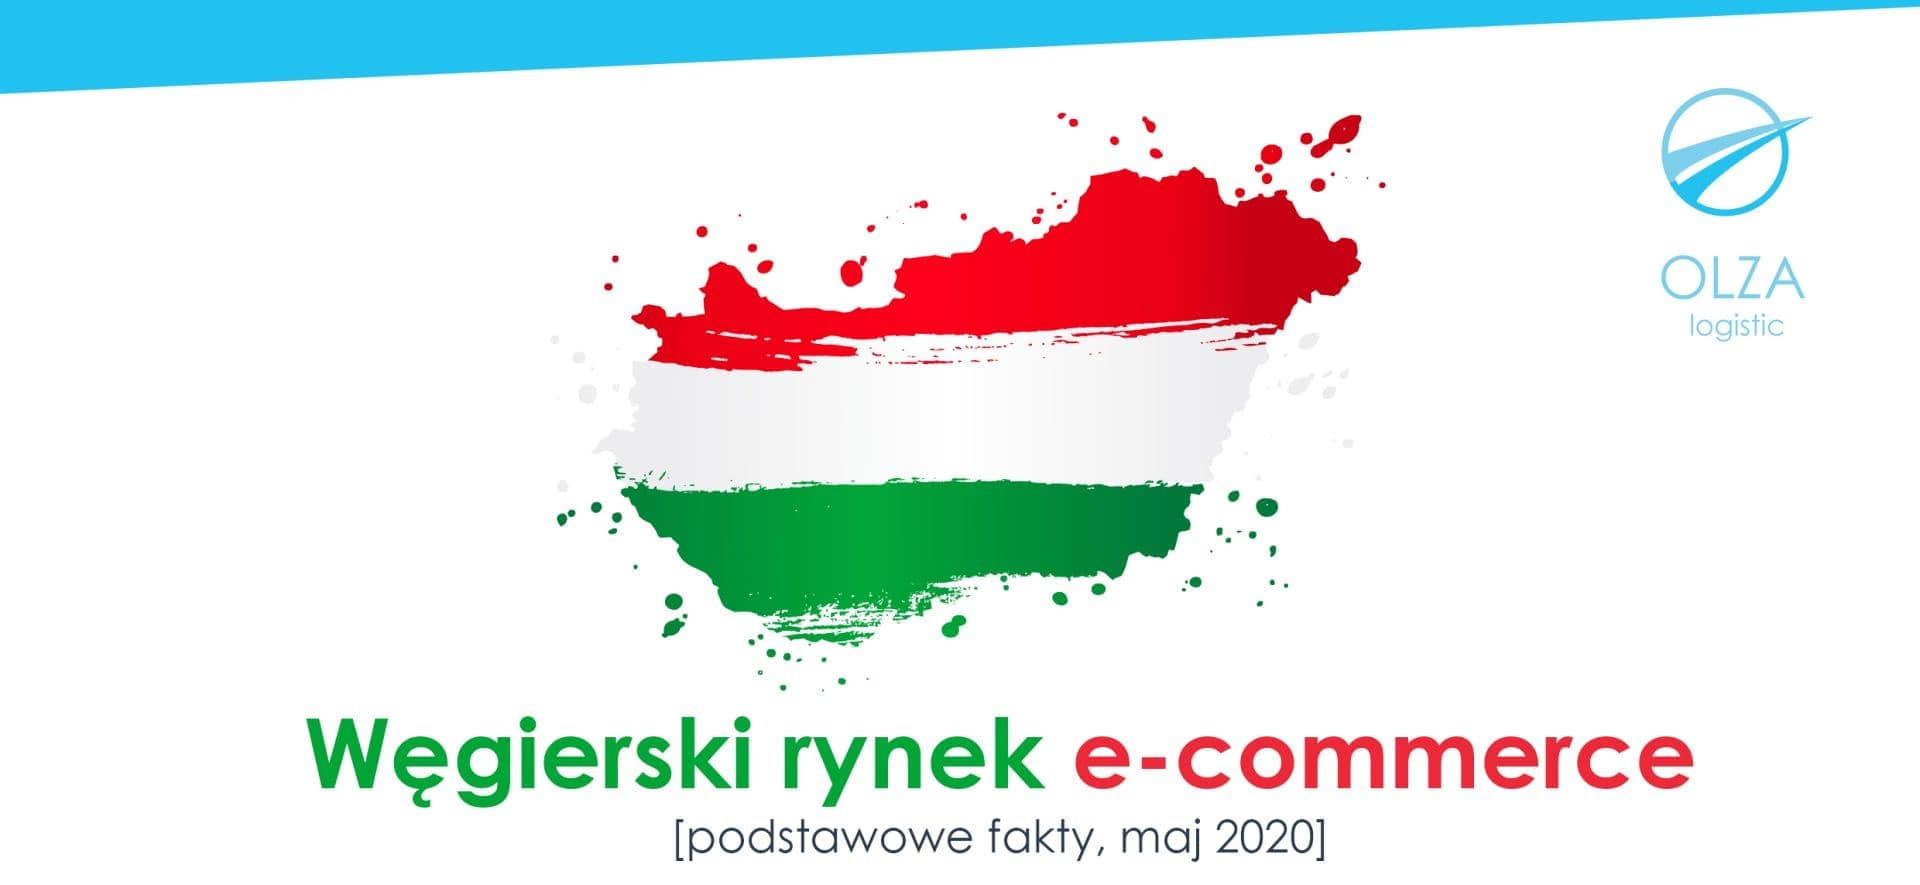 Węgierski rynek e-commerce - fact sheet